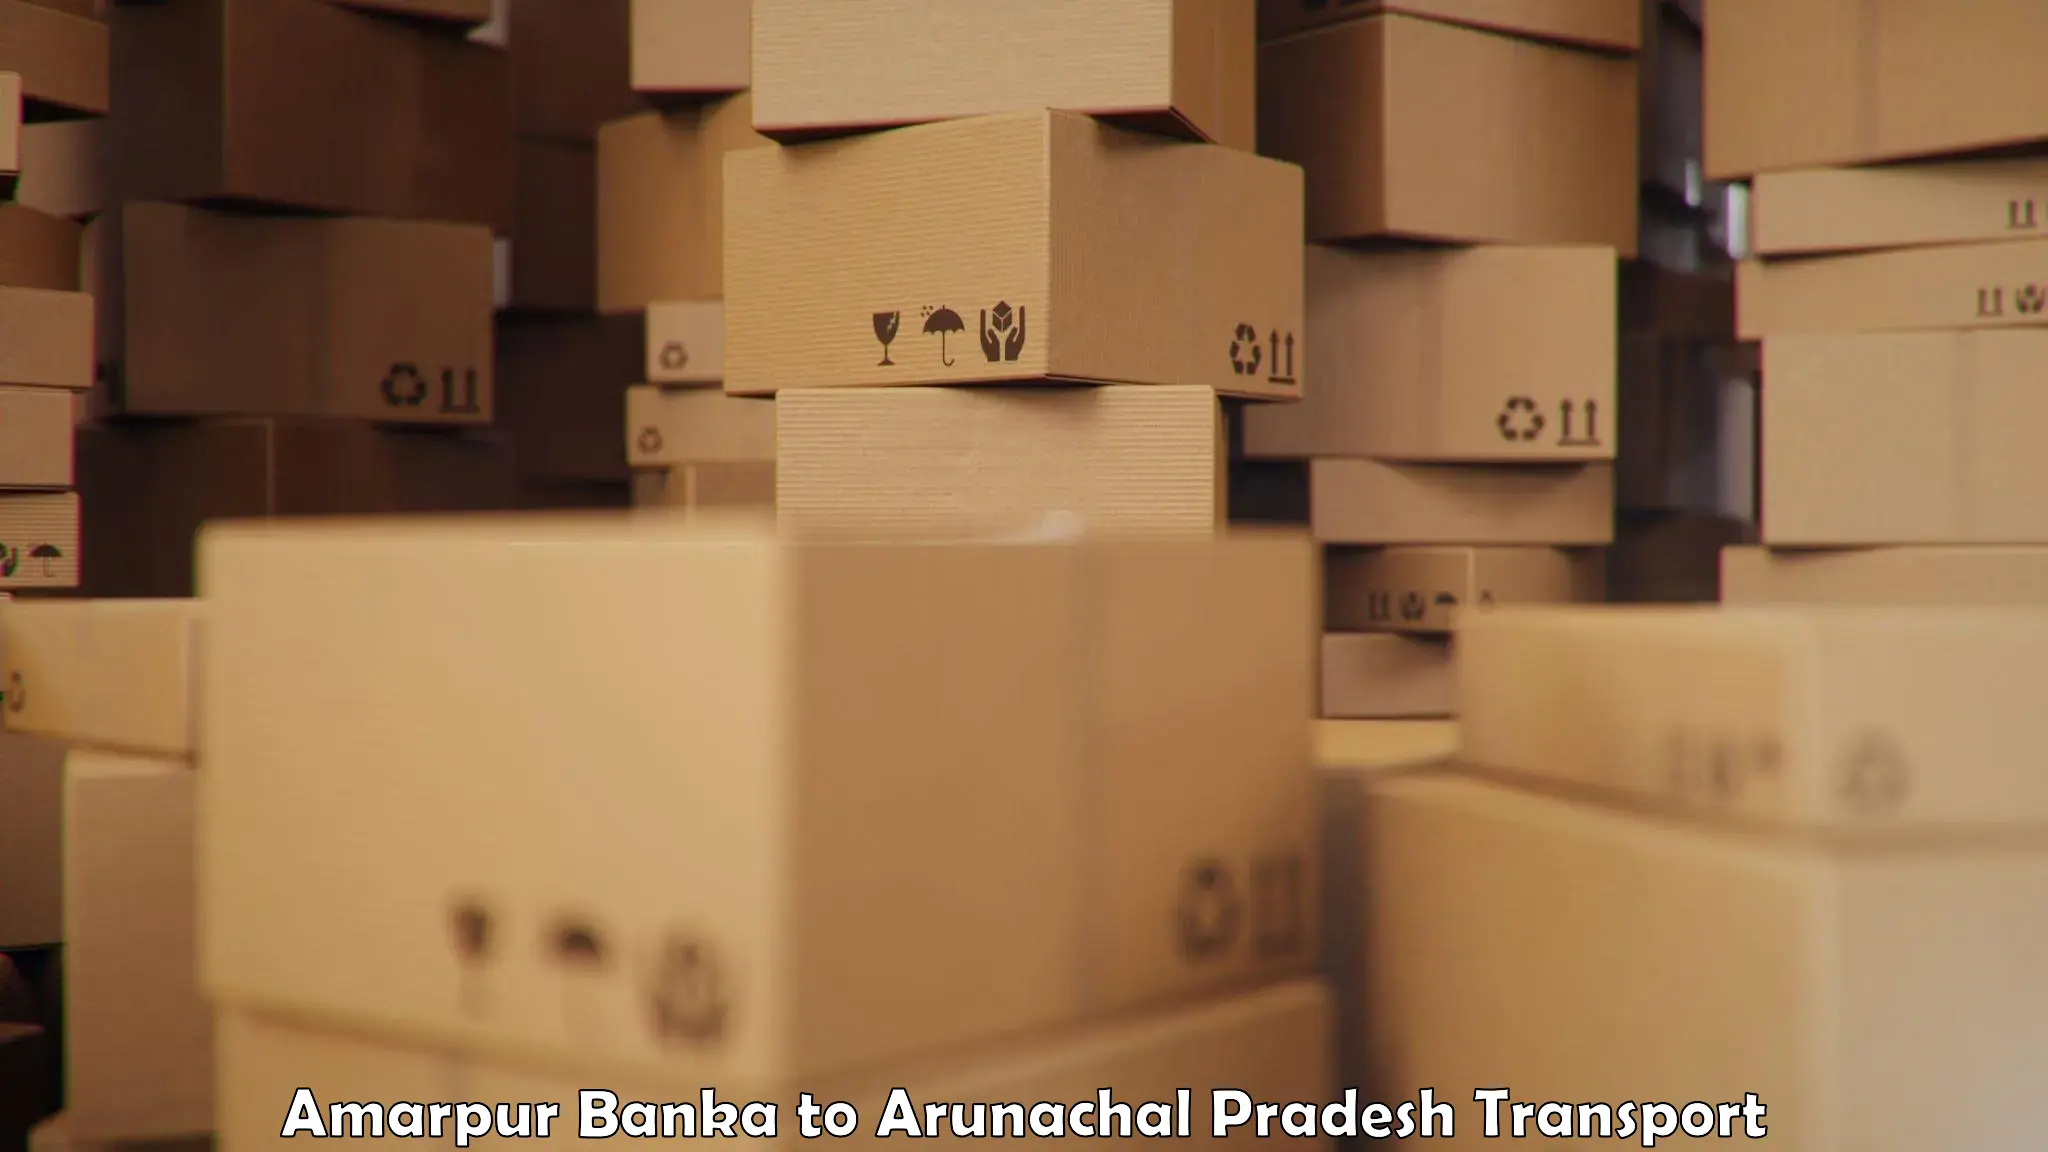 Truck transport companies in India Amarpur Banka to Diyun